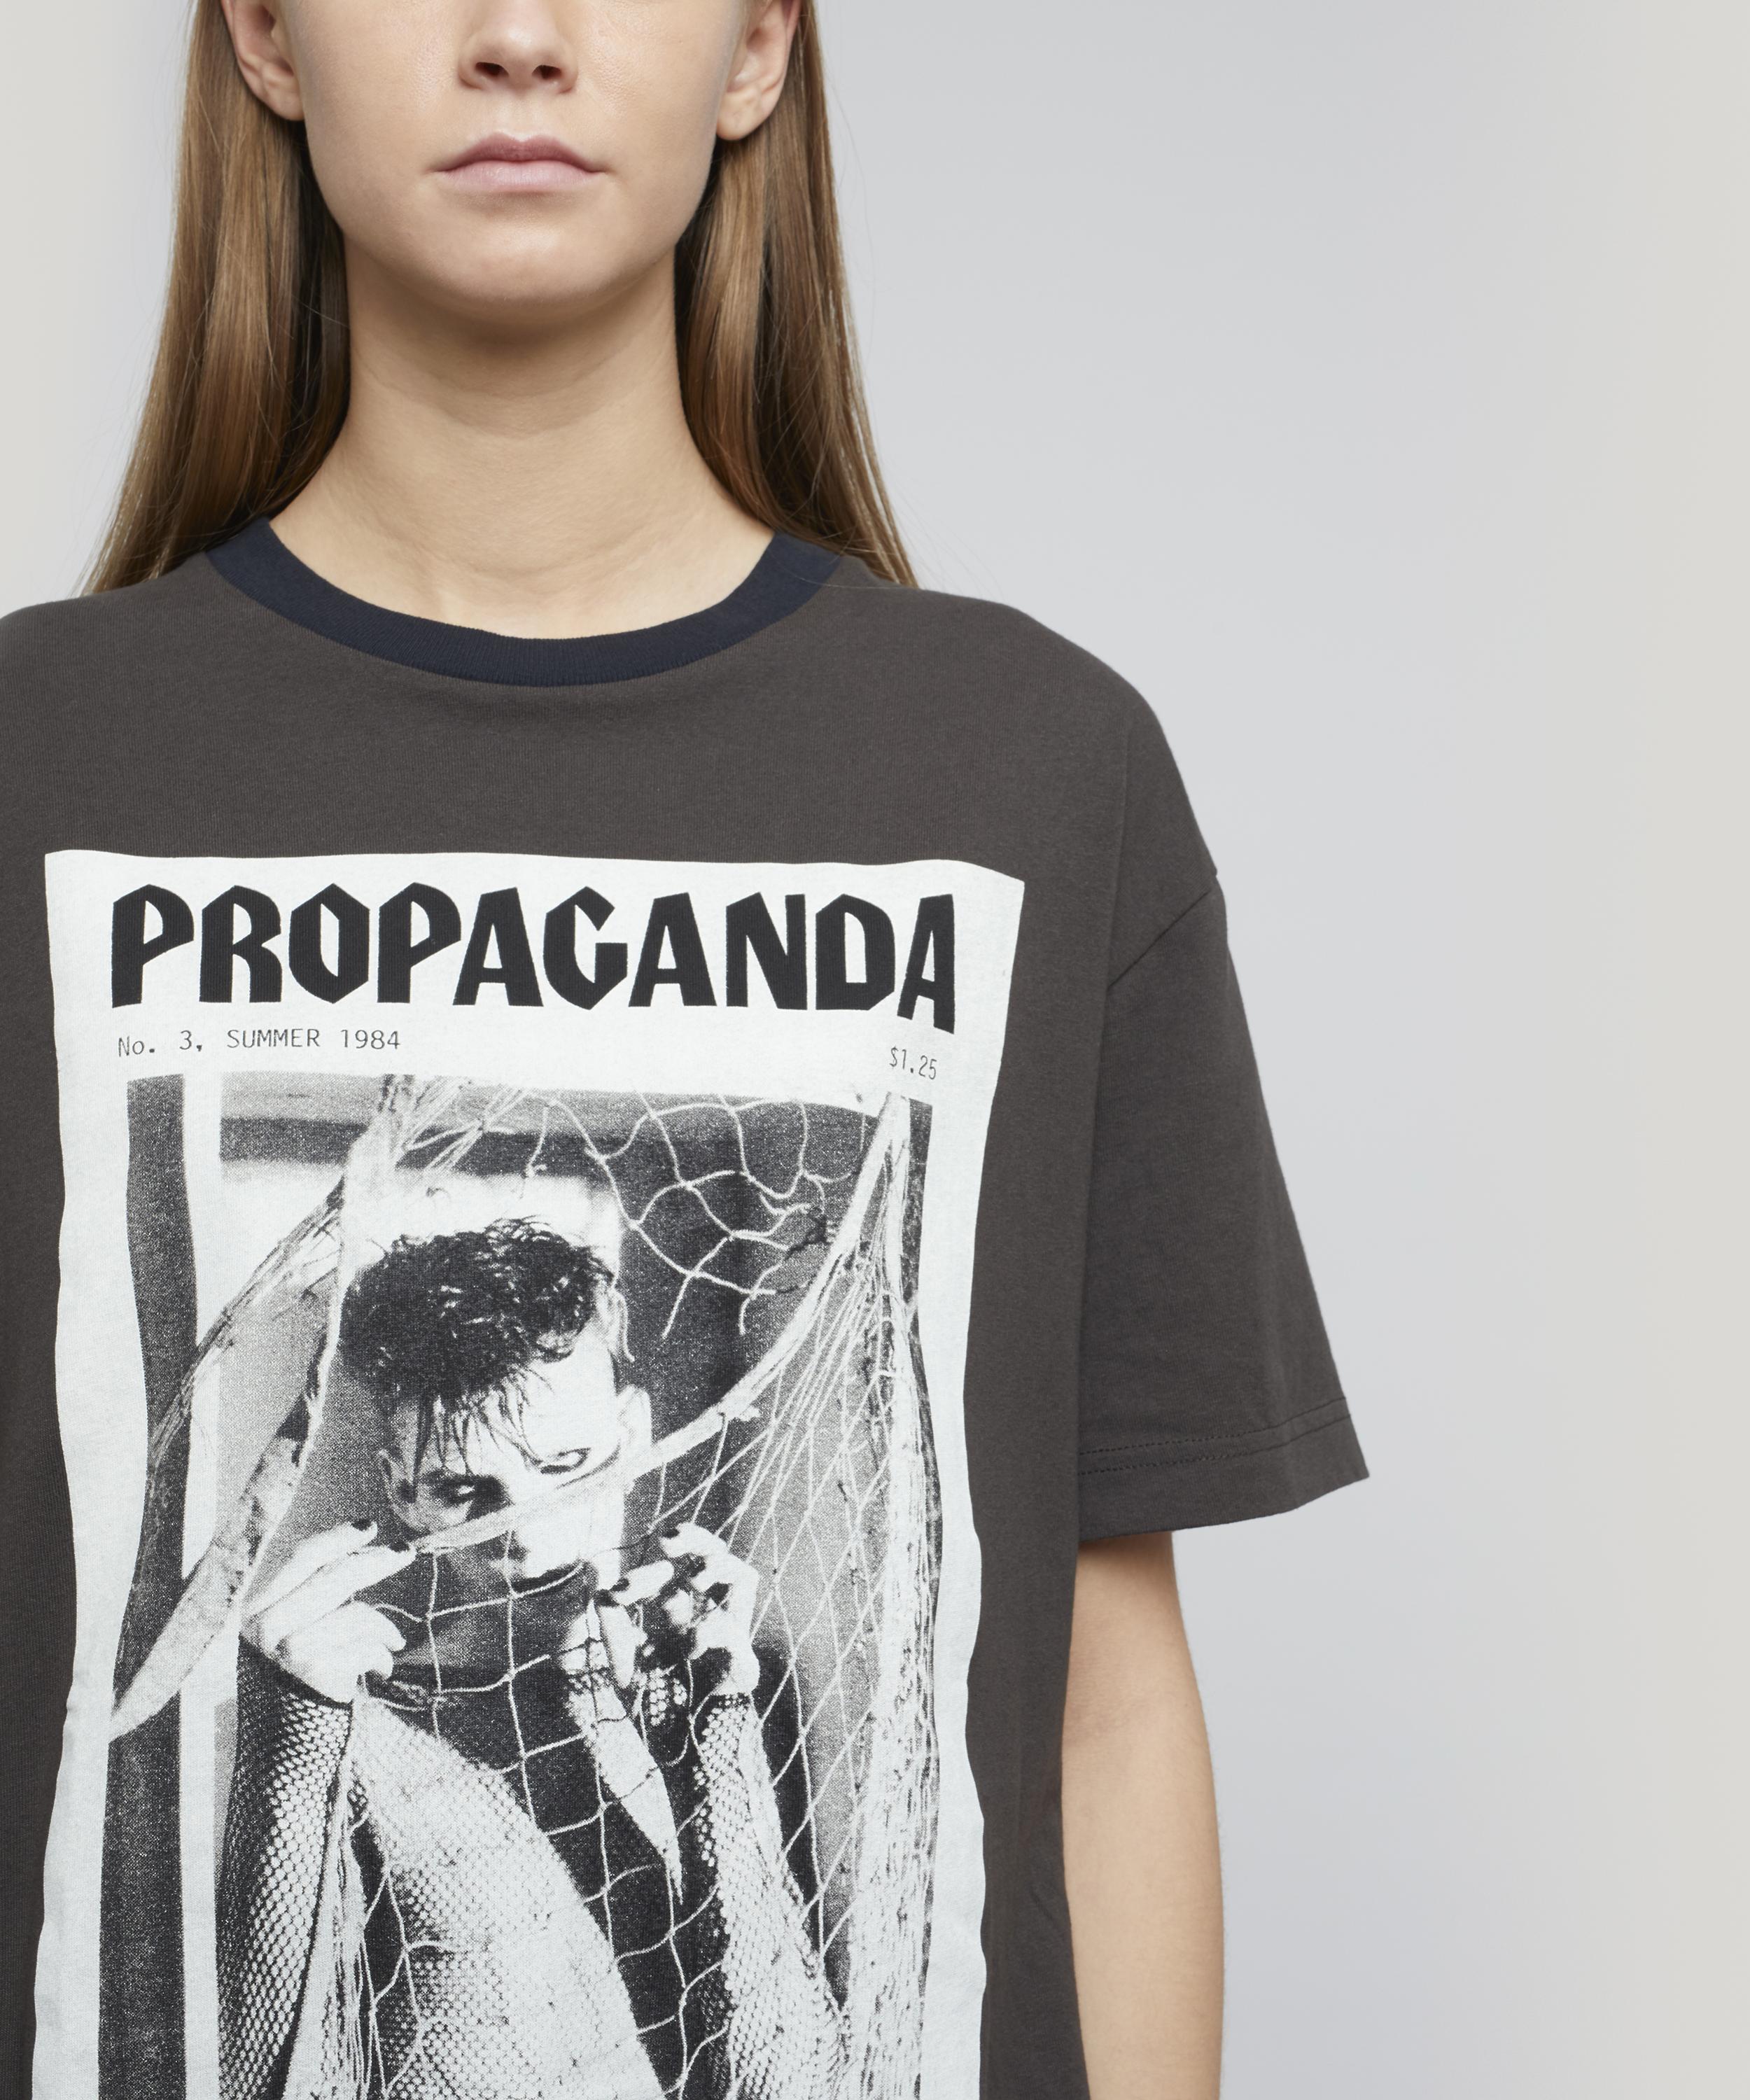 Acne Studios Cotton Propaganda Print T-shirt in Faded Black (Black) - Lyst